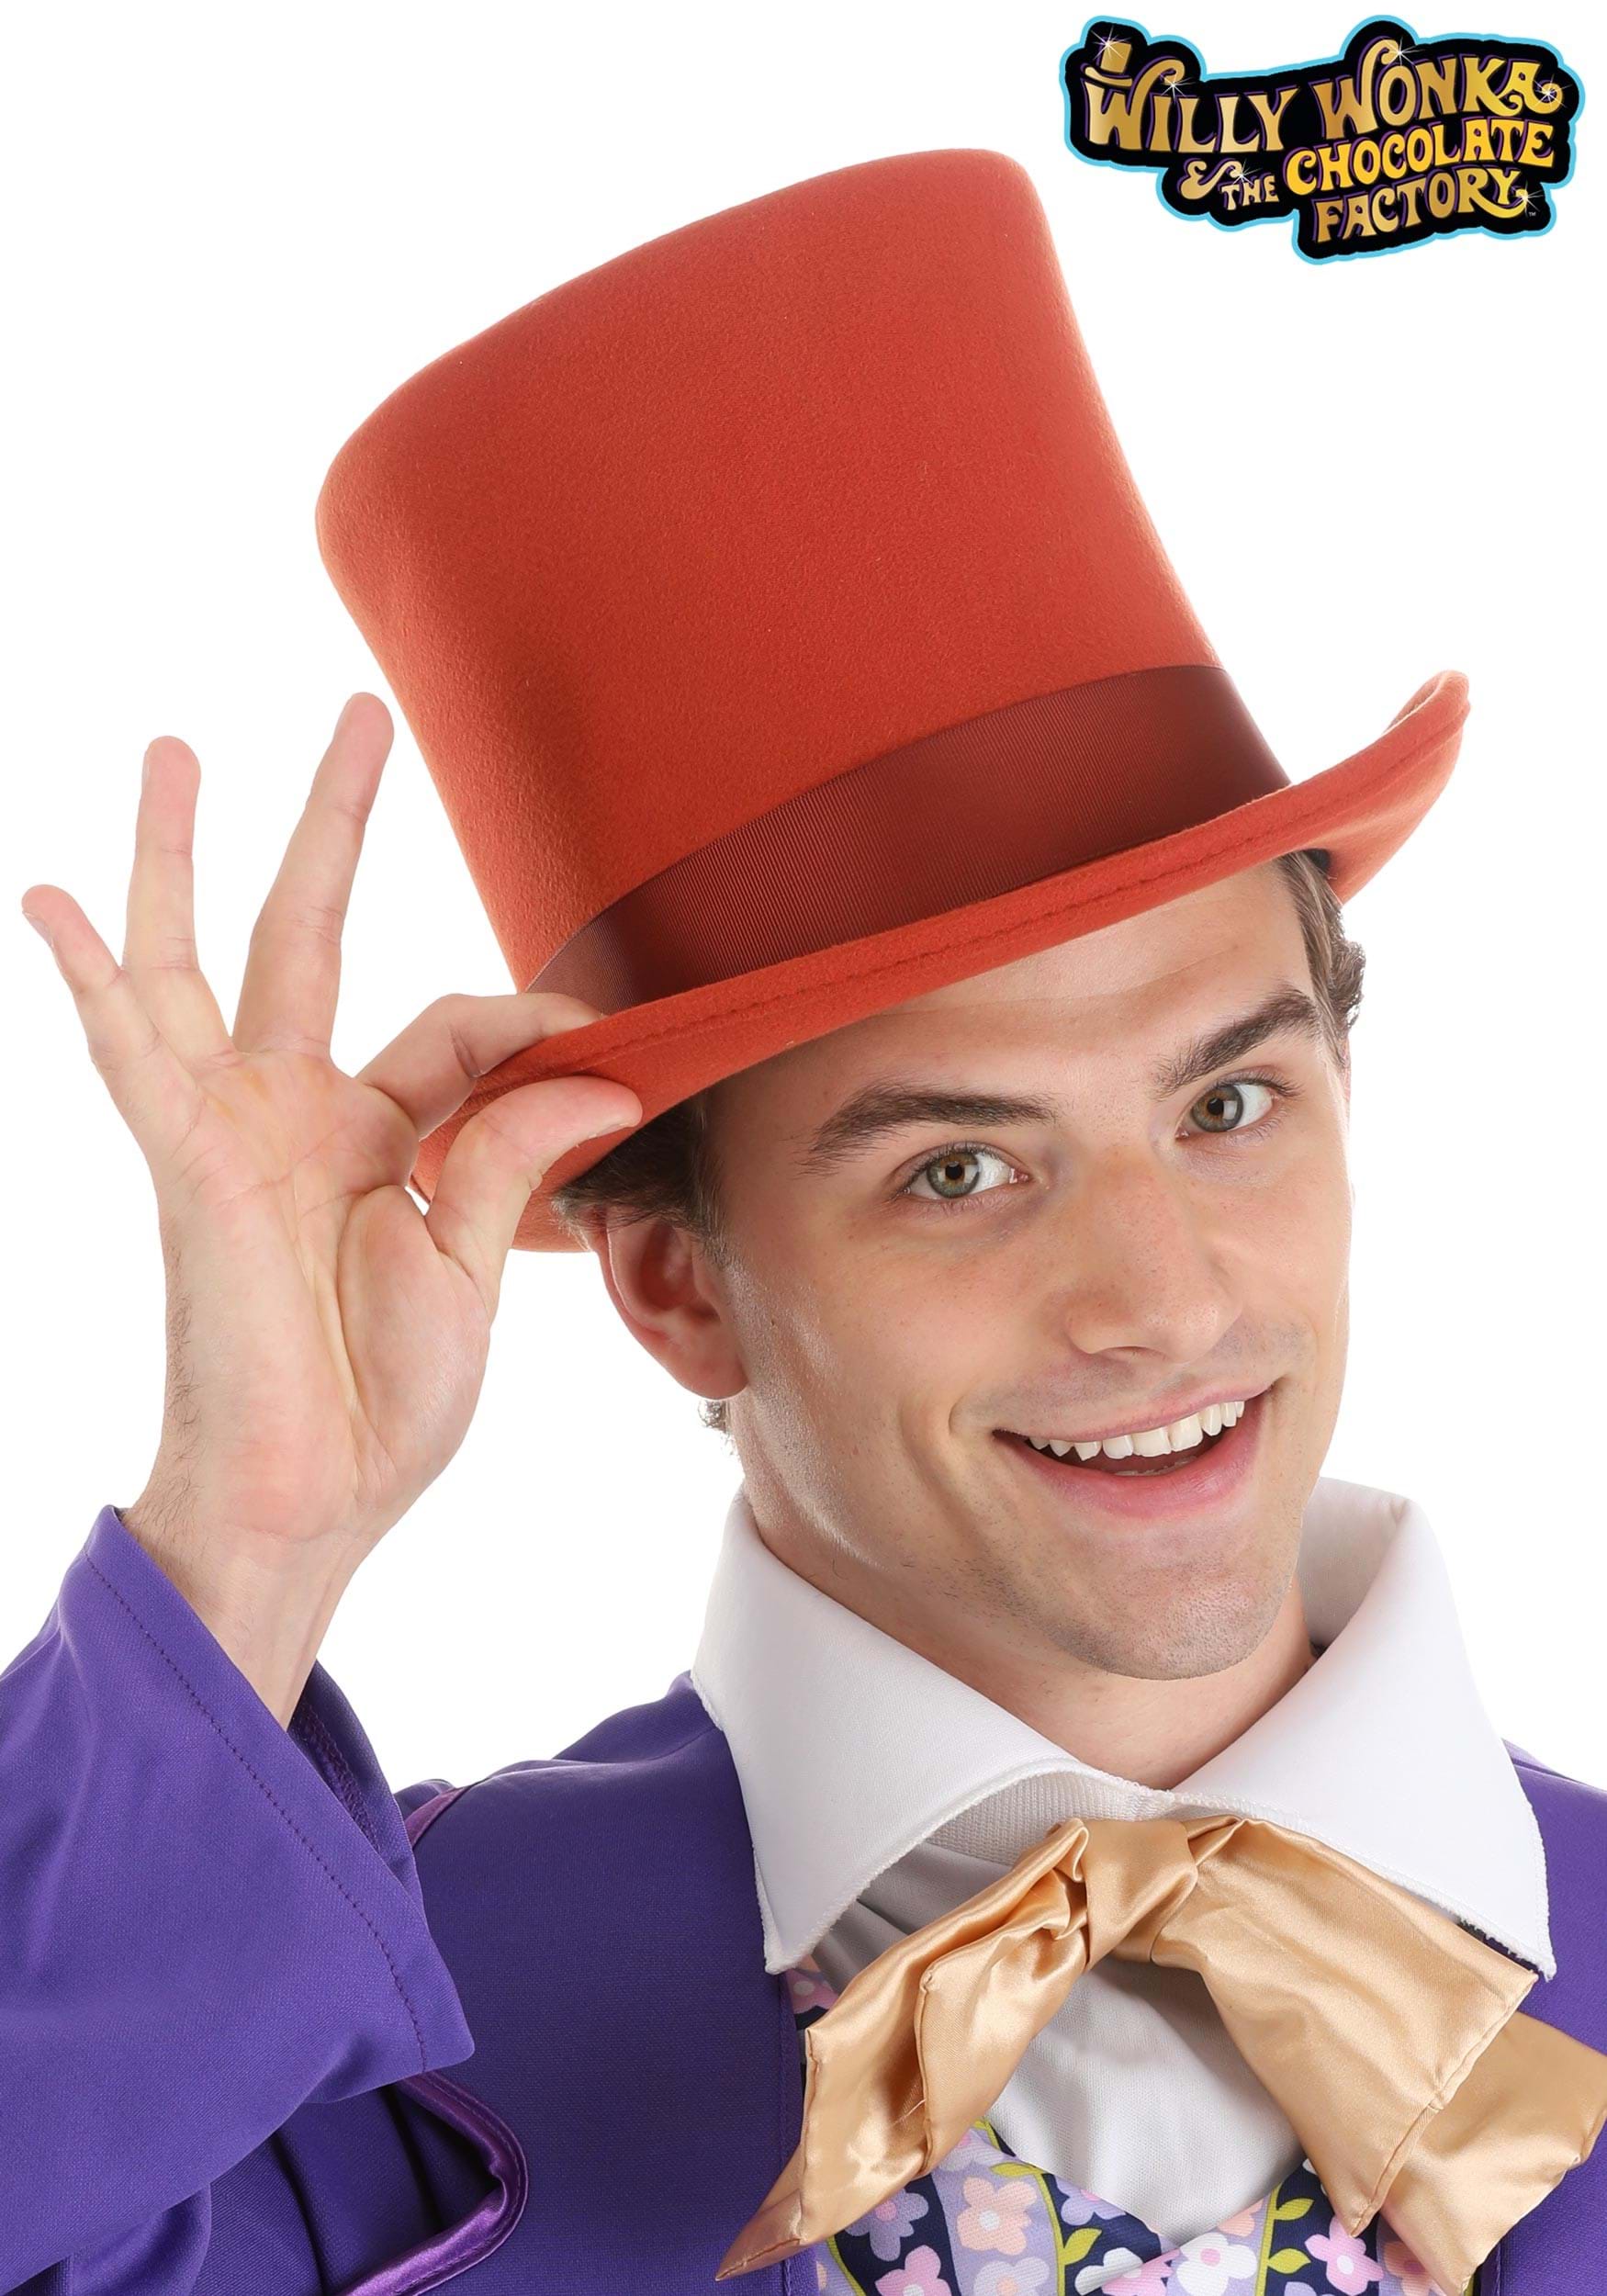 Adult Plus Size Willy Wonka Costume